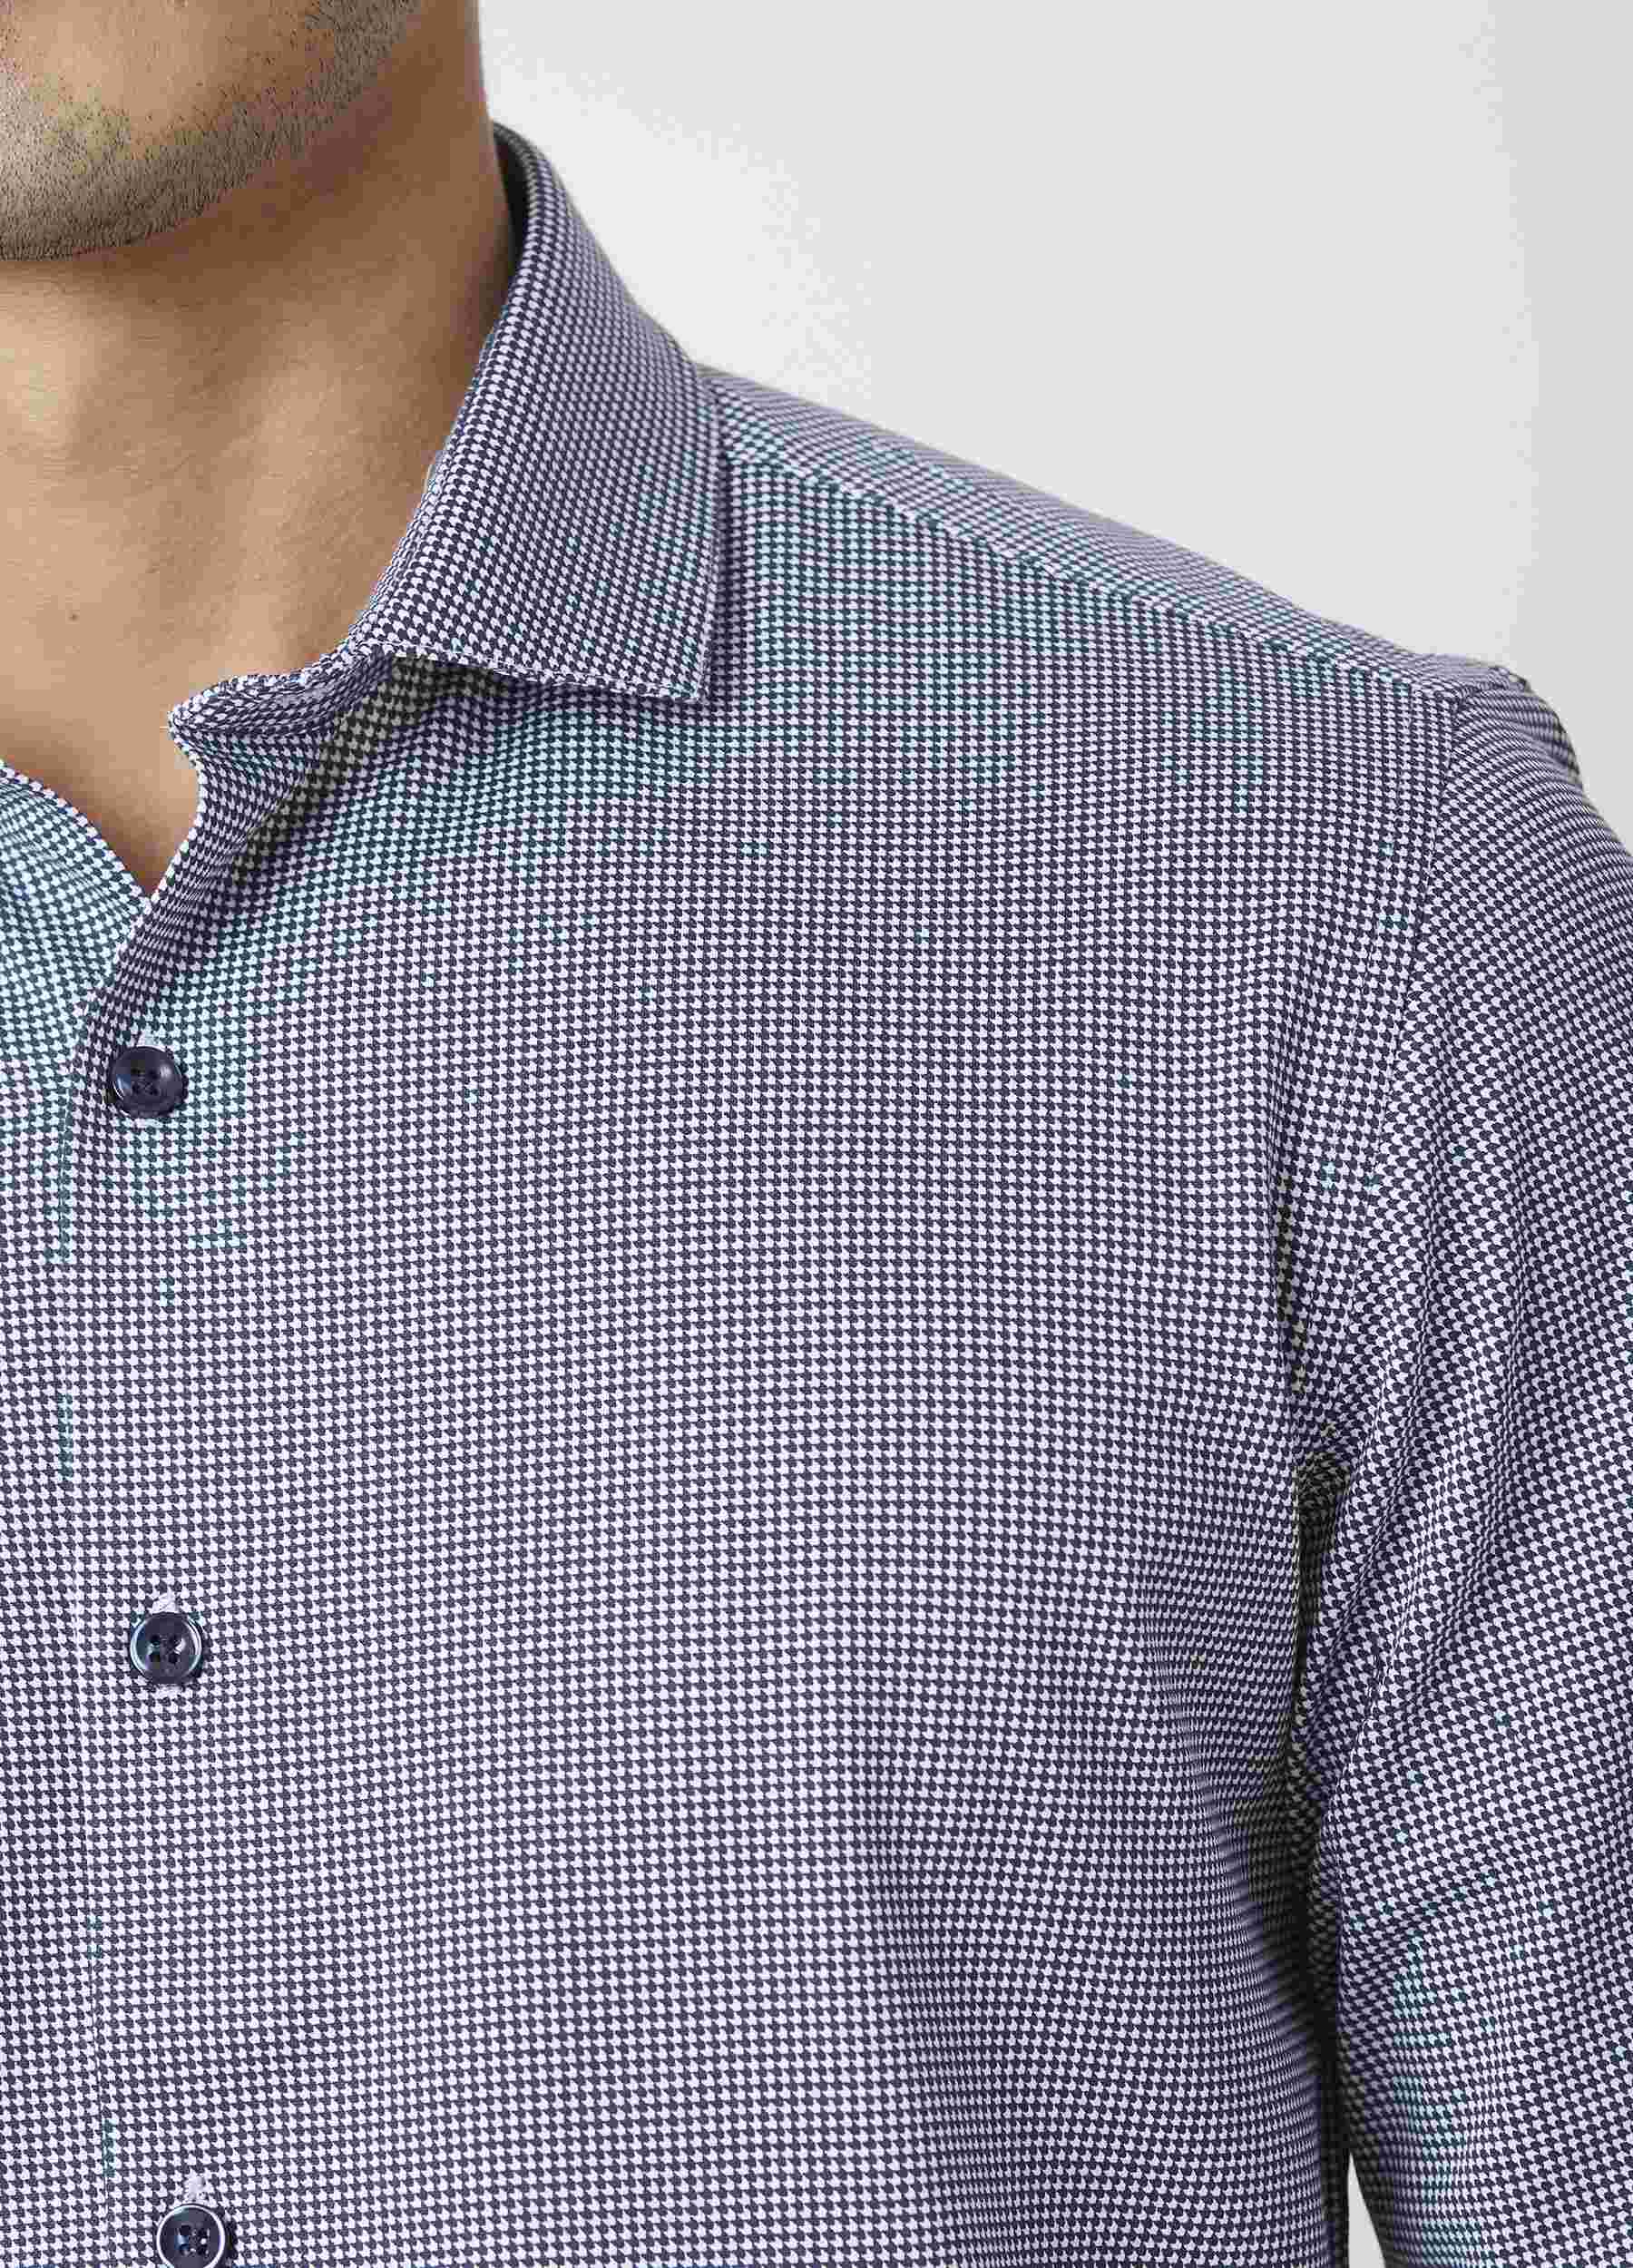 Velos Nev: Cutaway Collar Arrow Print Knit Shirt